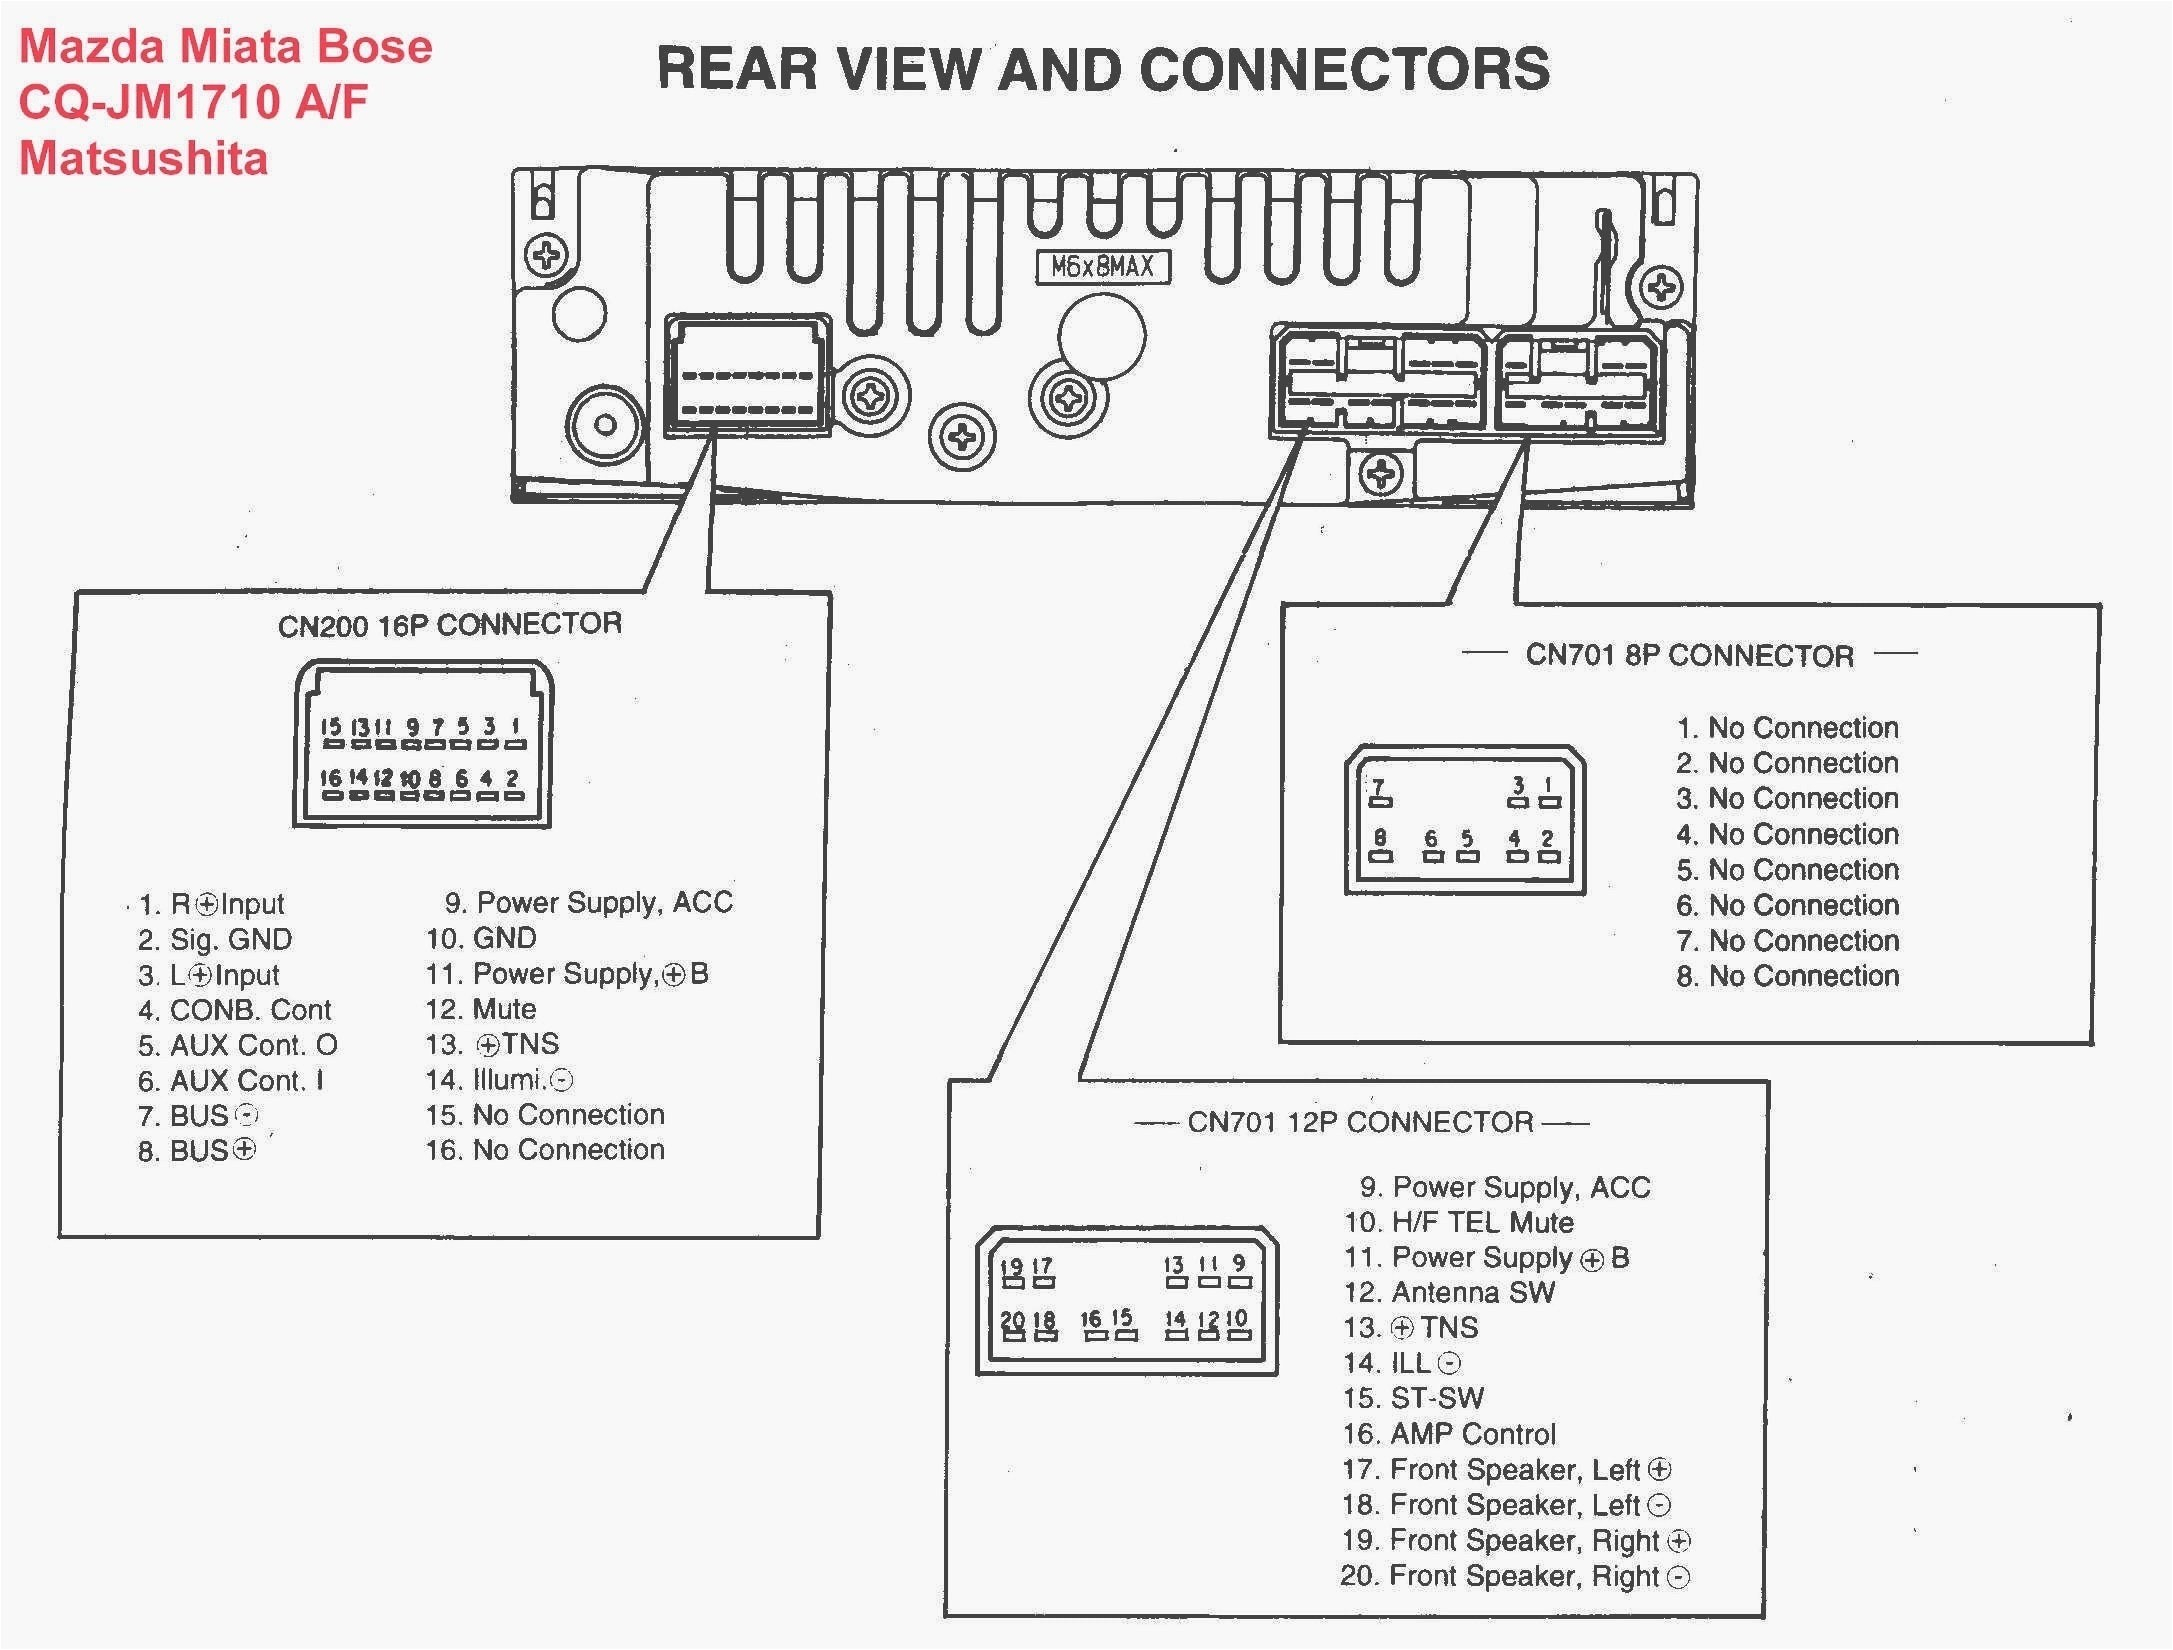 2013 avh p6500dvd wiring diagram schema wiring diagrampioneer avic n1 cpn1899 wiring diagram parking brake bypass